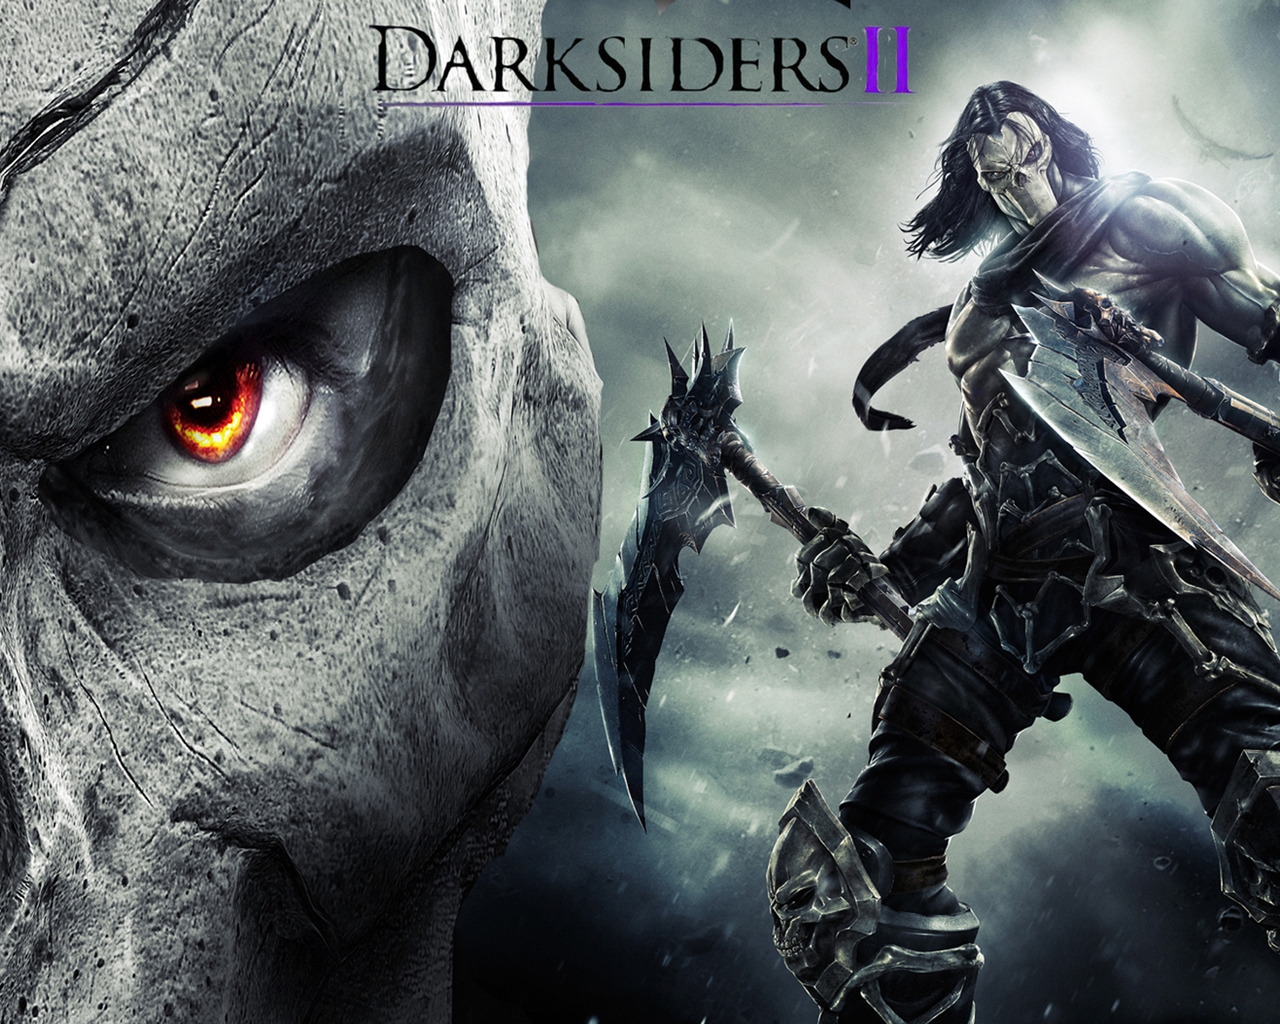 Darksiders II for 1280 x 1024 resolution